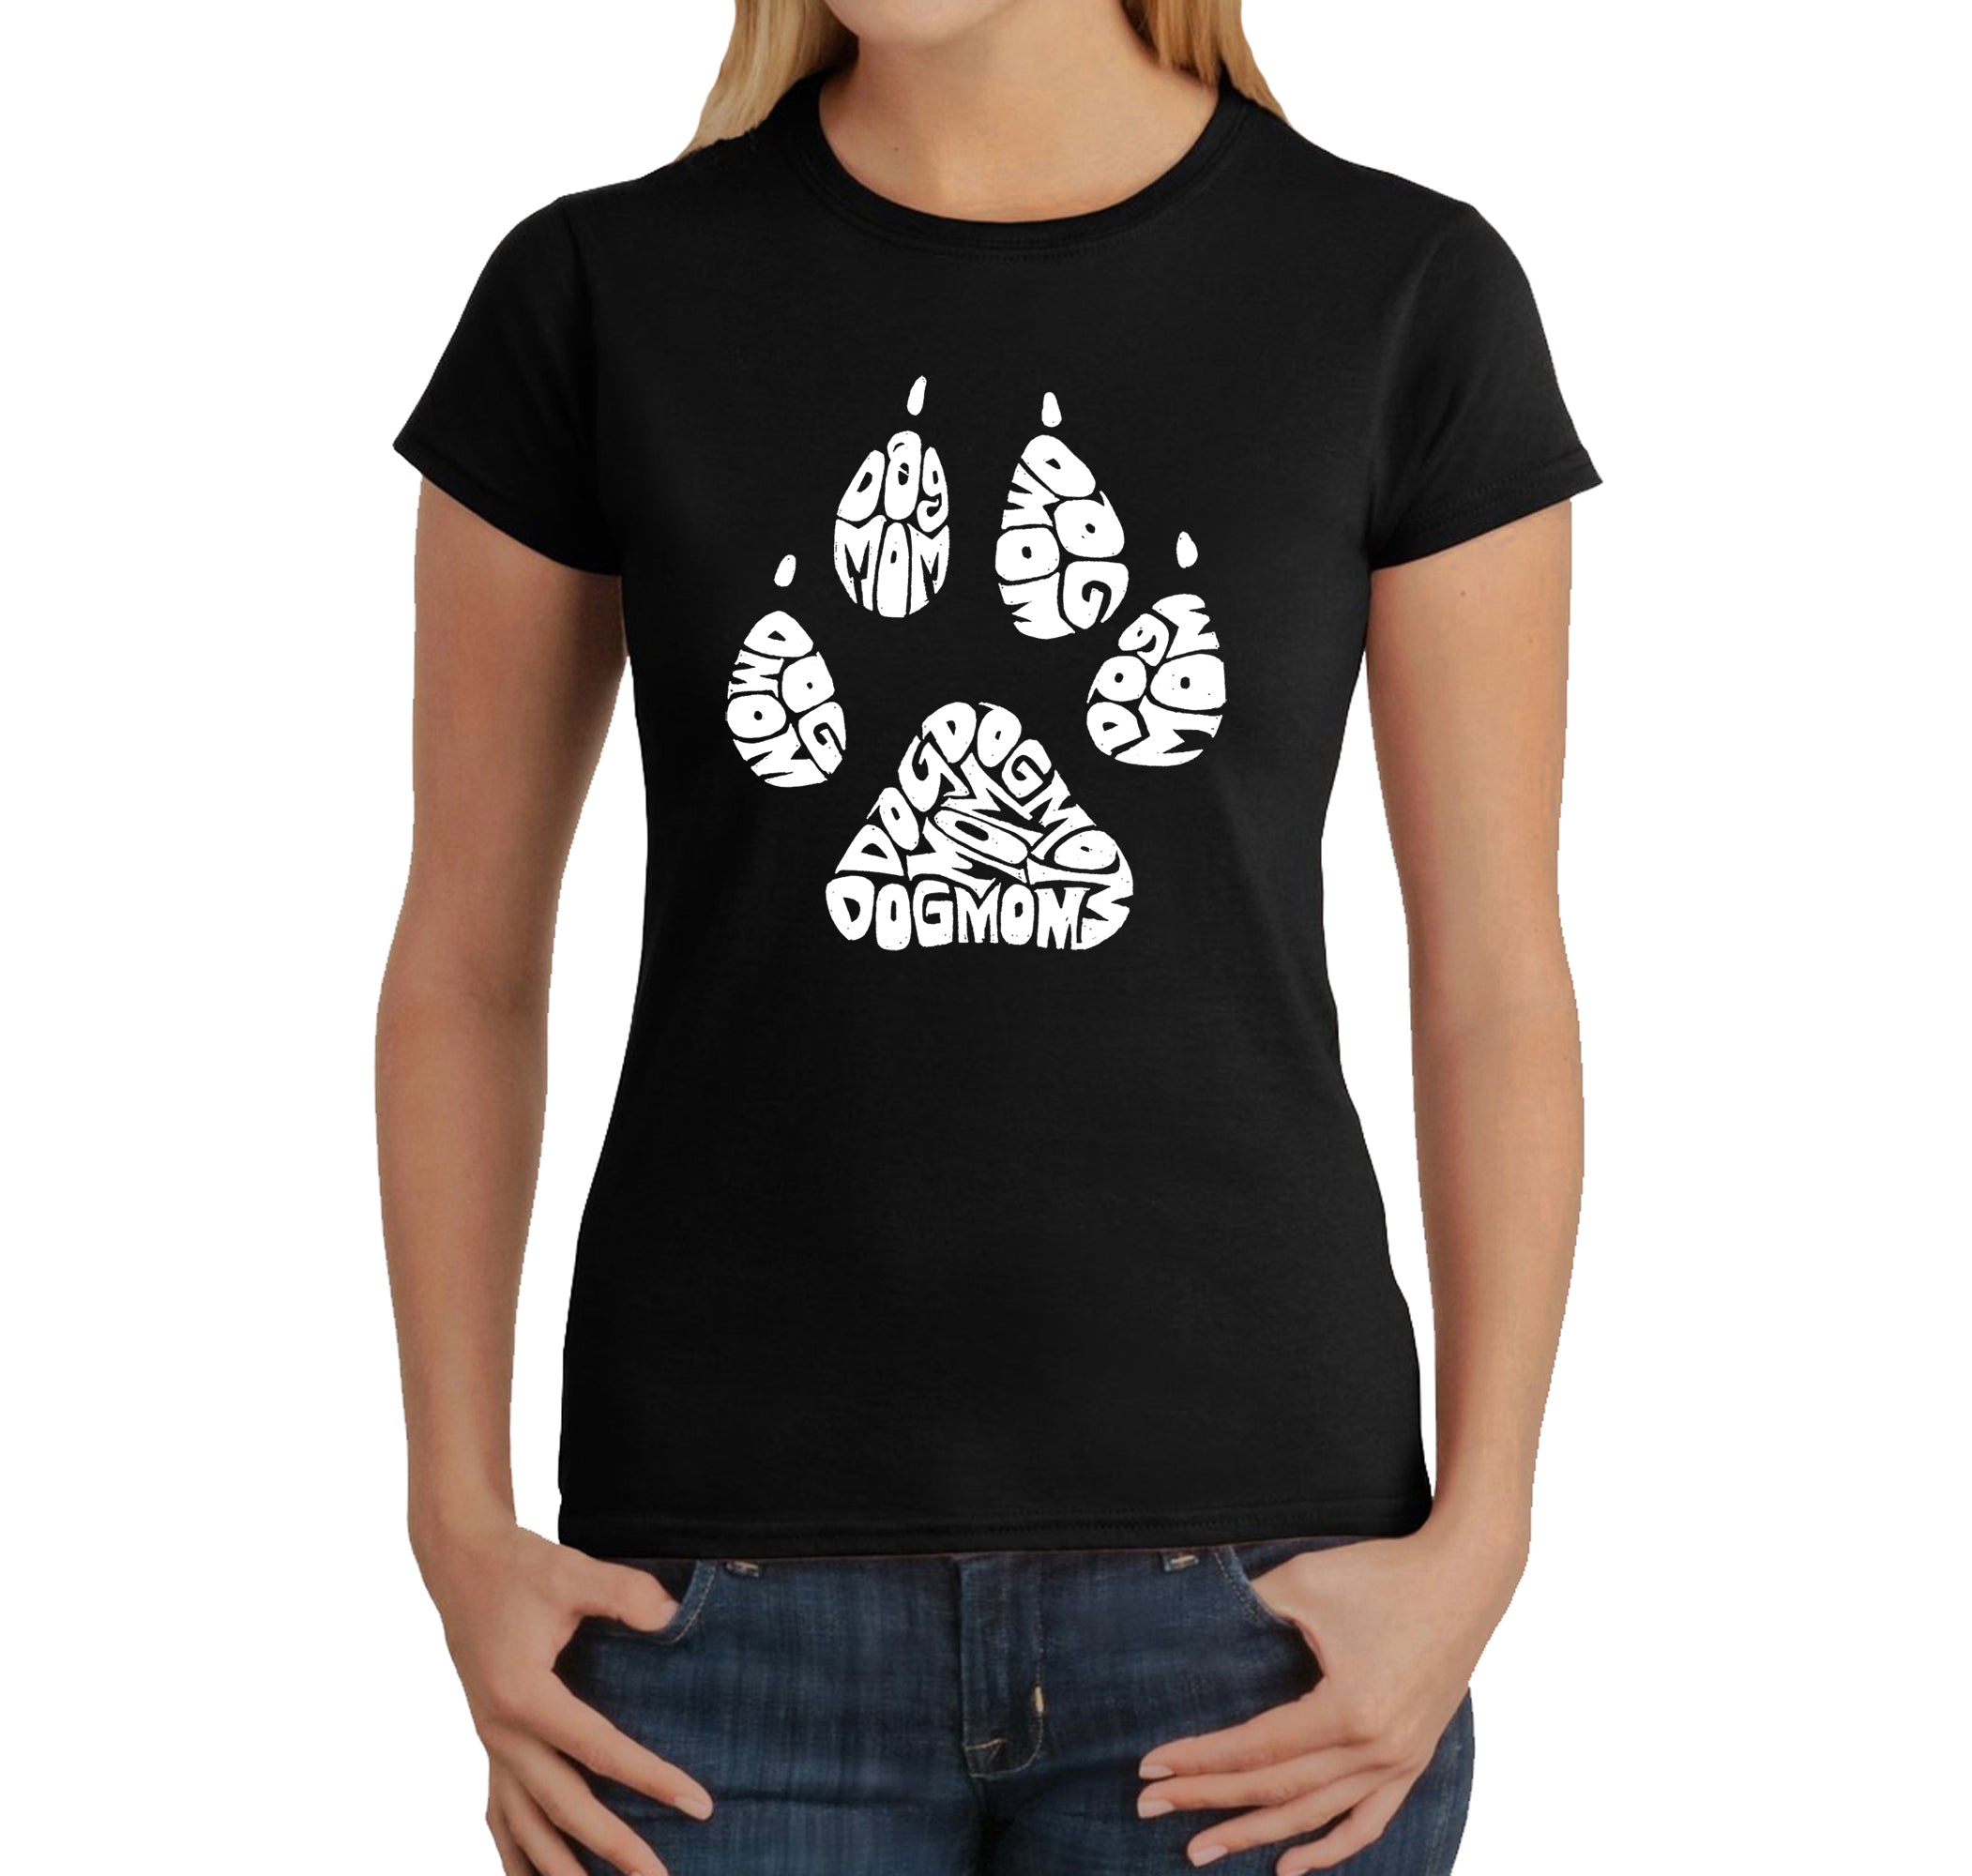 Dog Mom - Women's Word Art T-Shirt - Black - Large